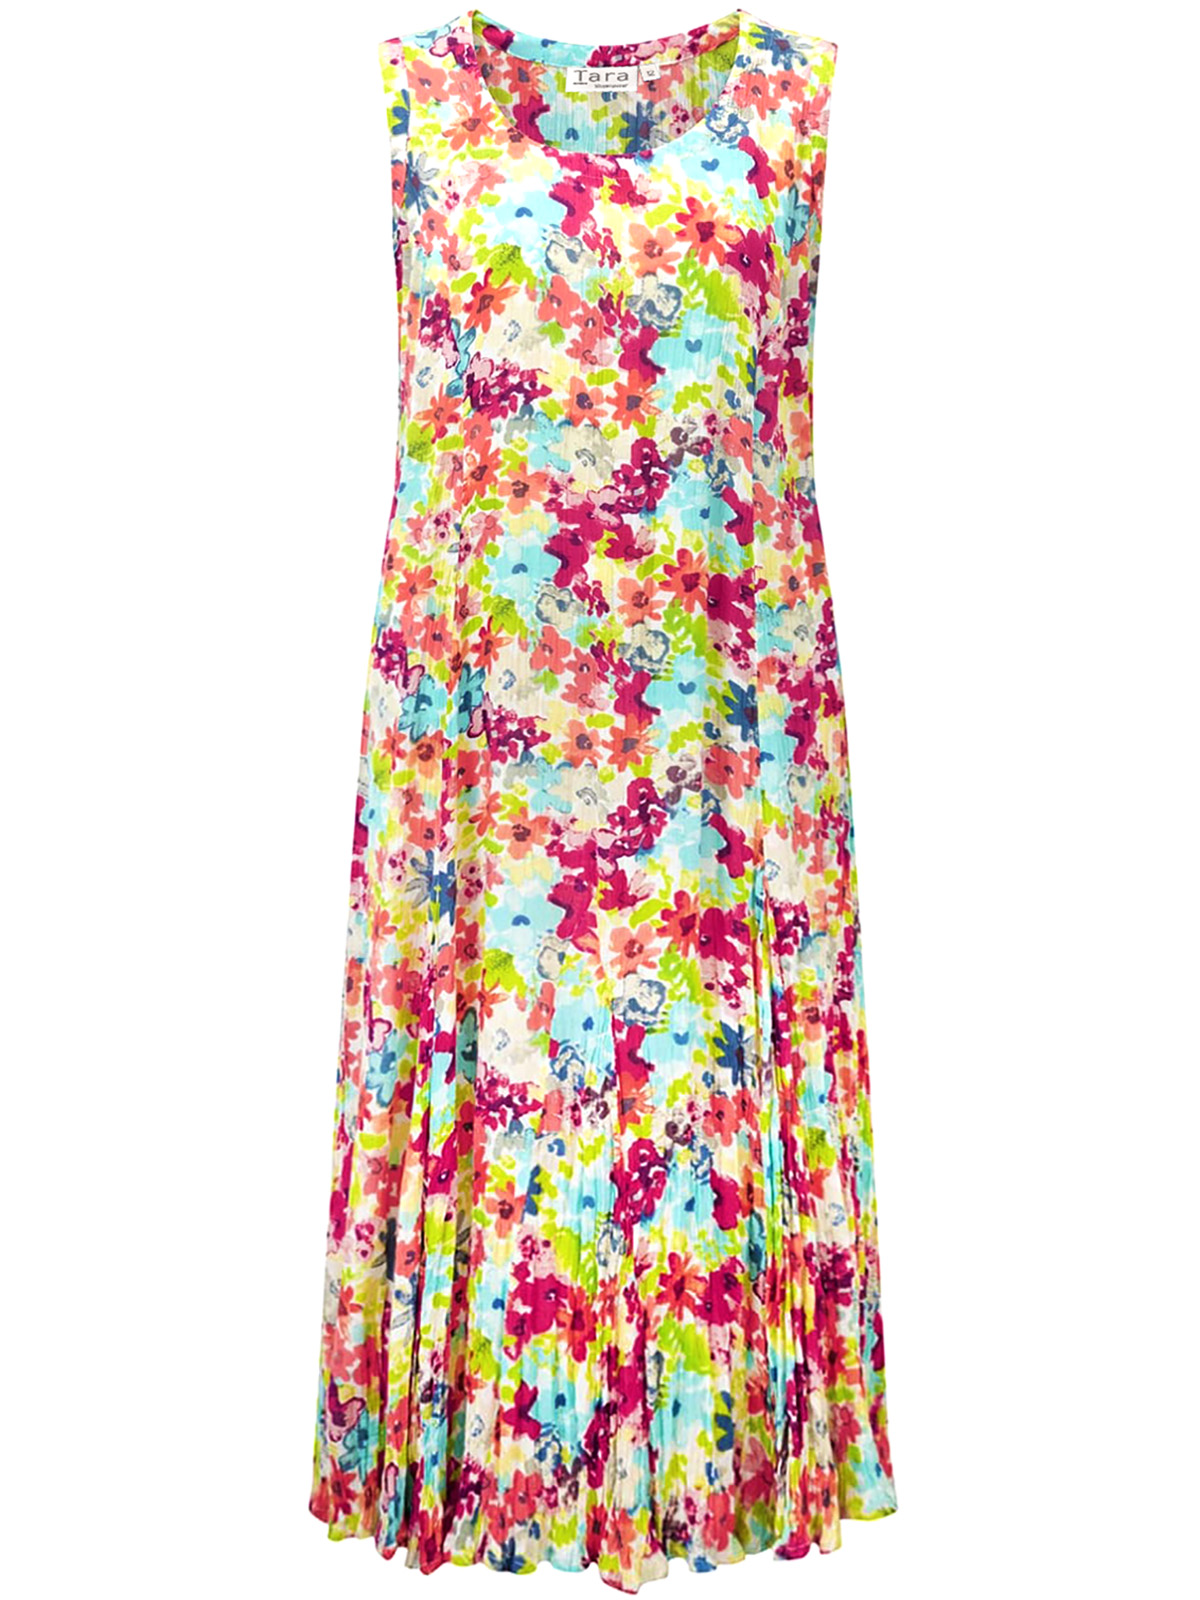 Tara - - Tara MULTI Floral Print Maxi Dress - Size 12 to 18